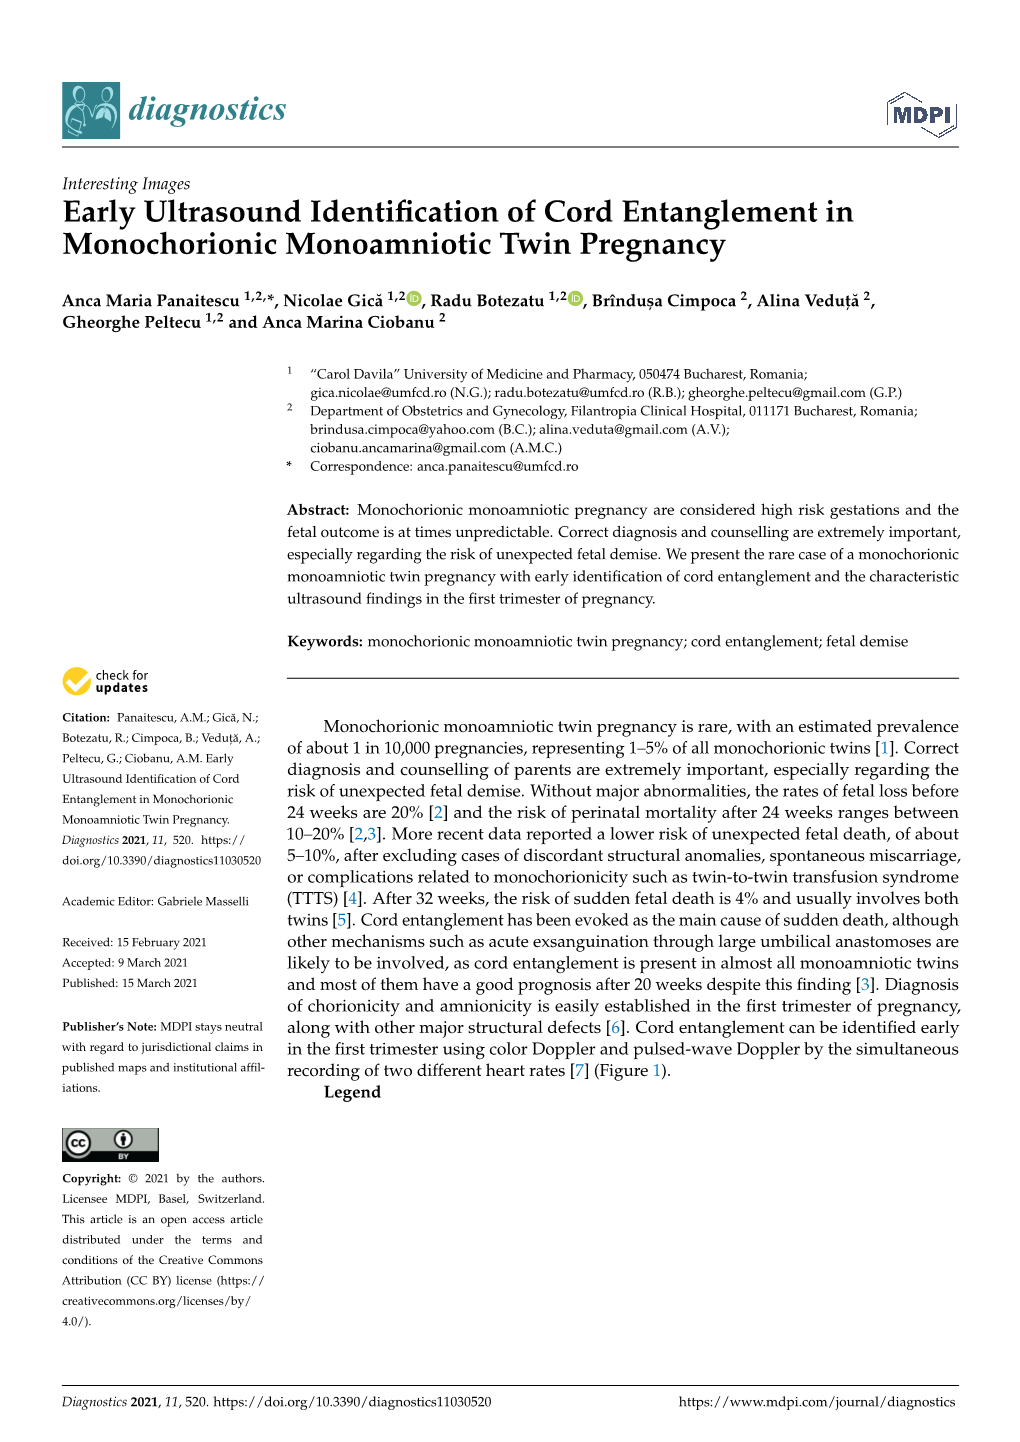 Early Ultrasound Identification of Cord Entanglement in Monochorionic Monoamniotic Twin Pregnancy